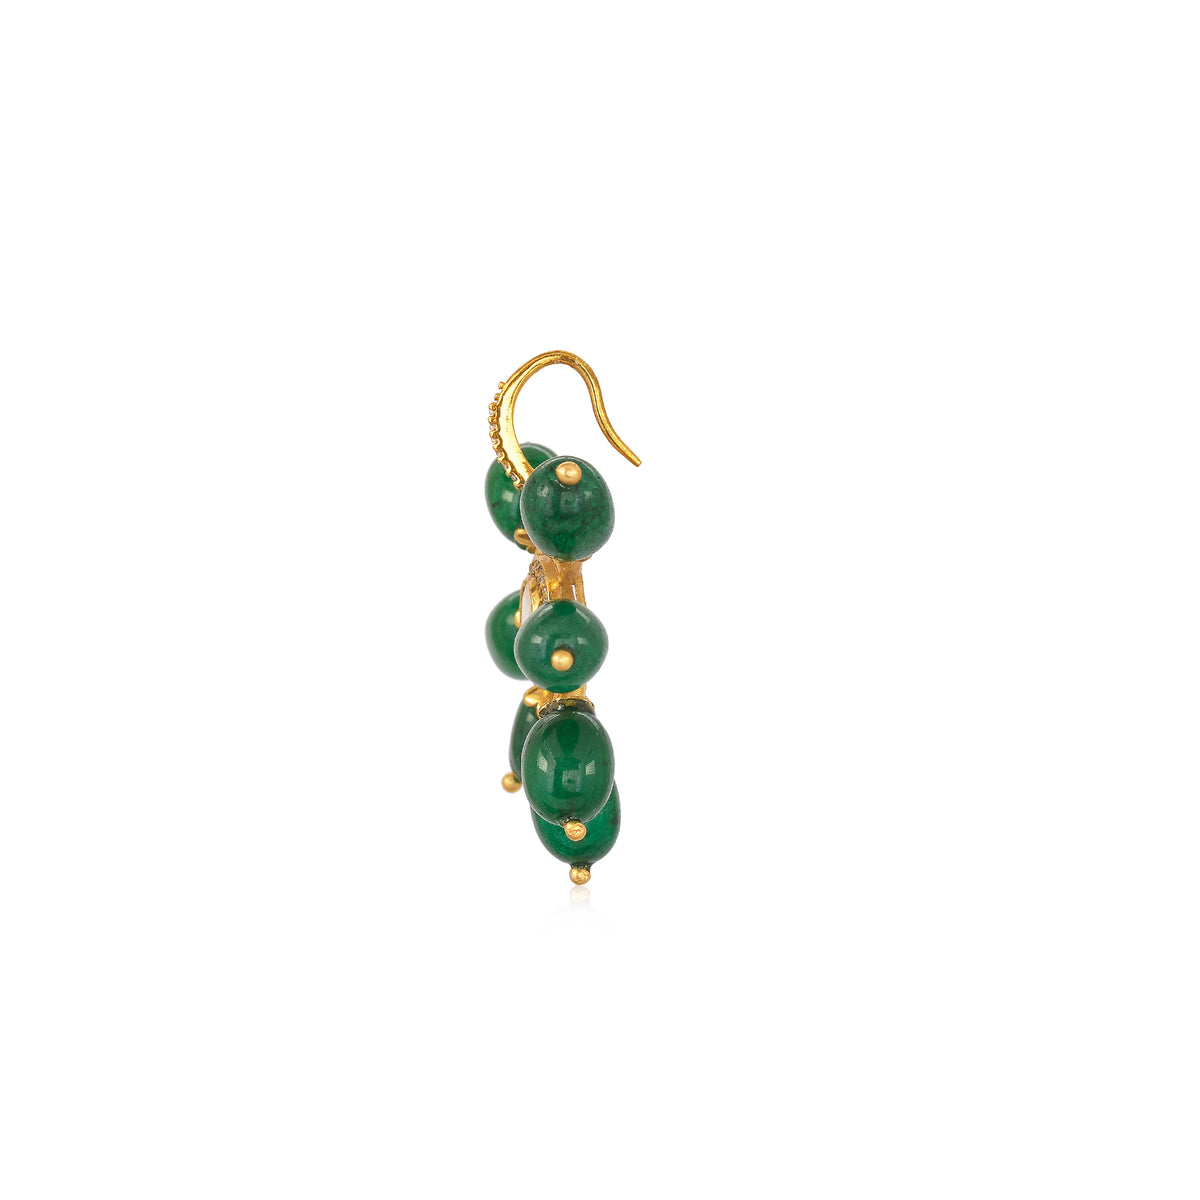 Green Chakri Earrings